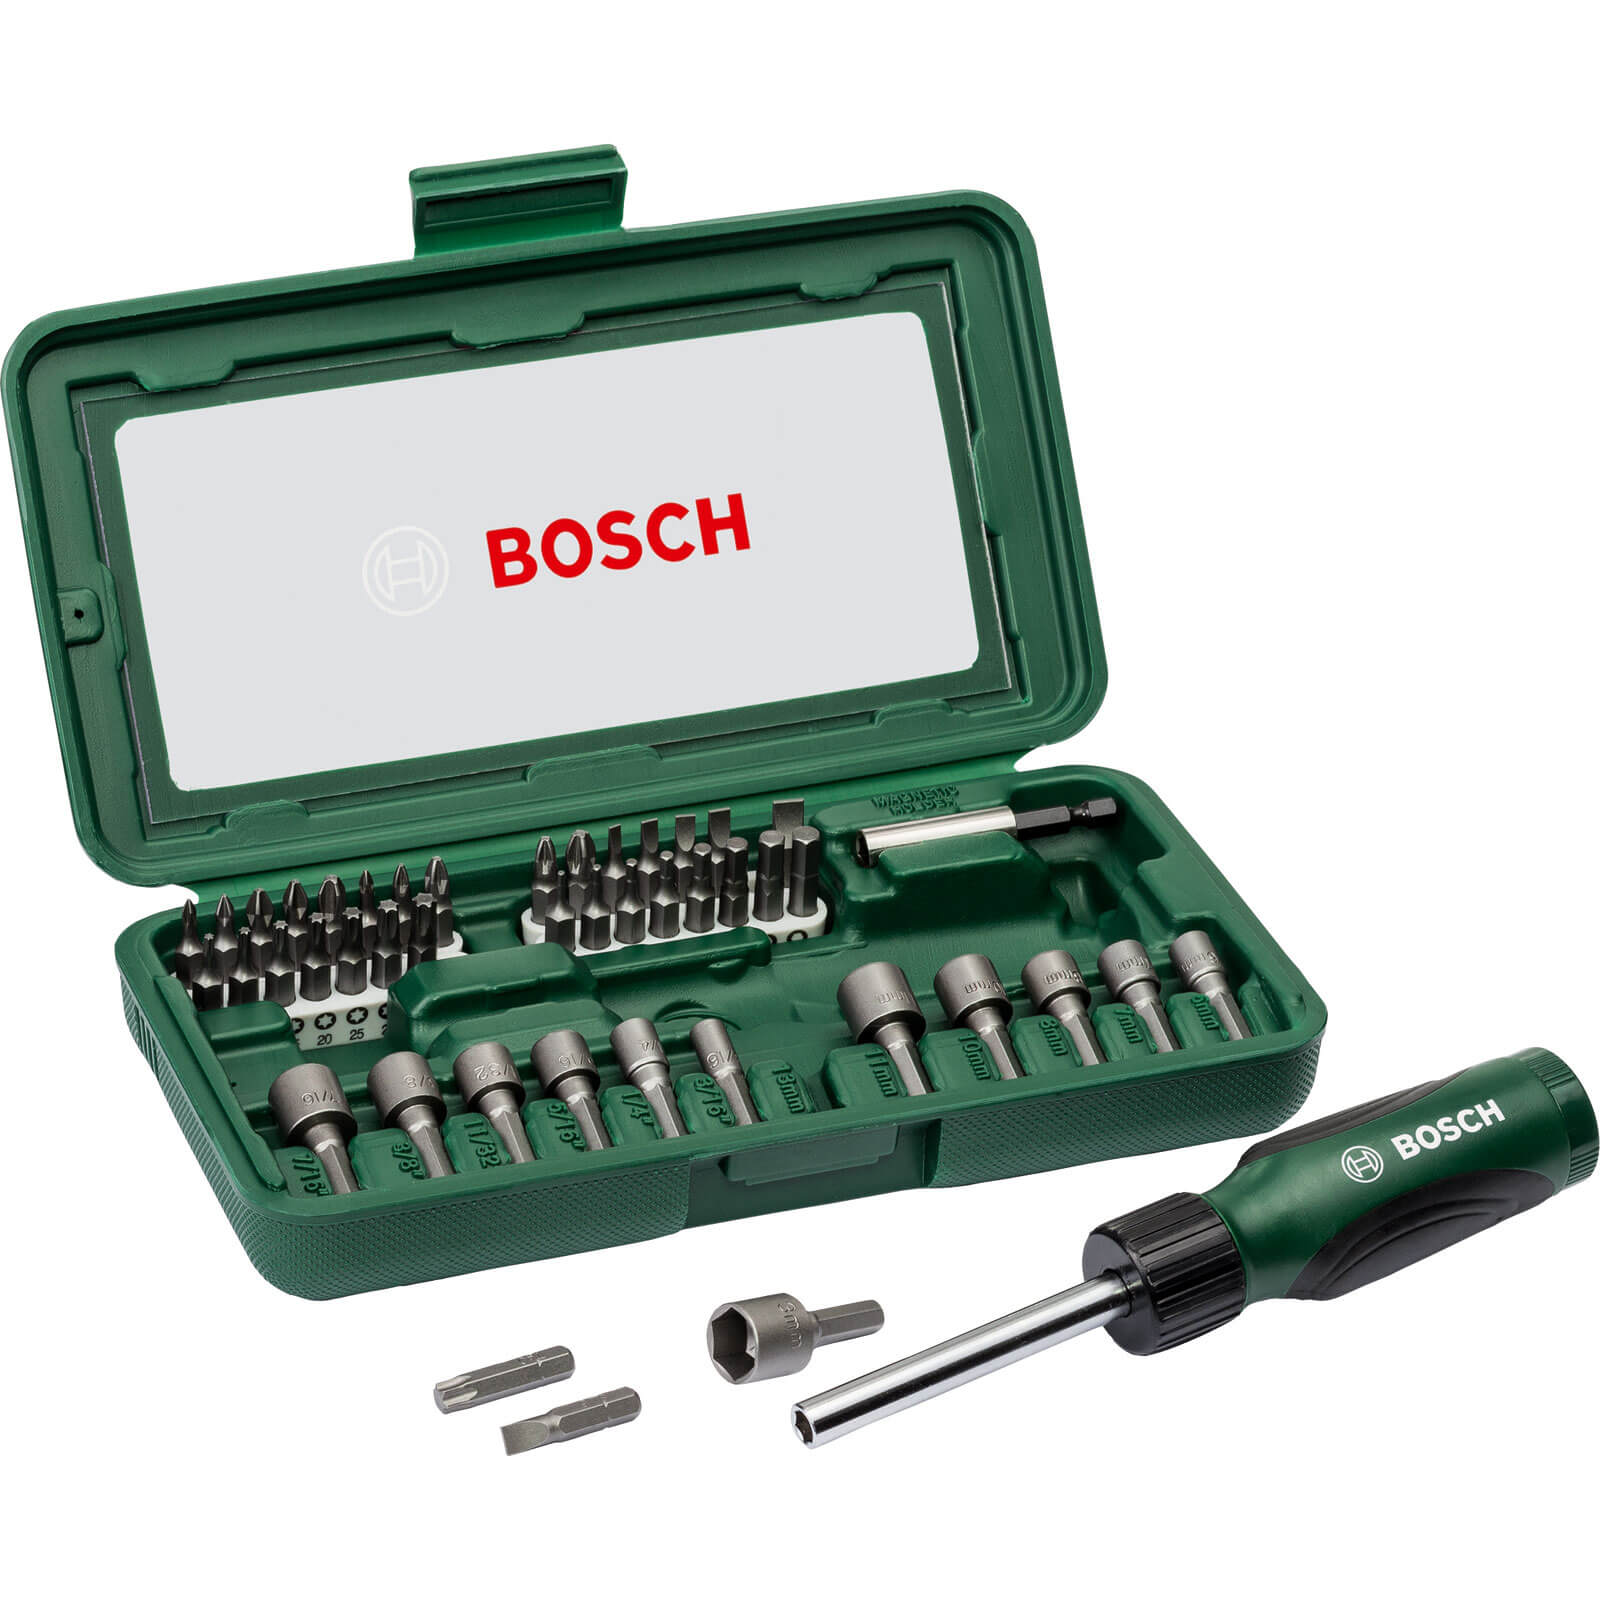 Image of Bosch 46 Piece Ratchet Screwdriver Bit and Socket Set